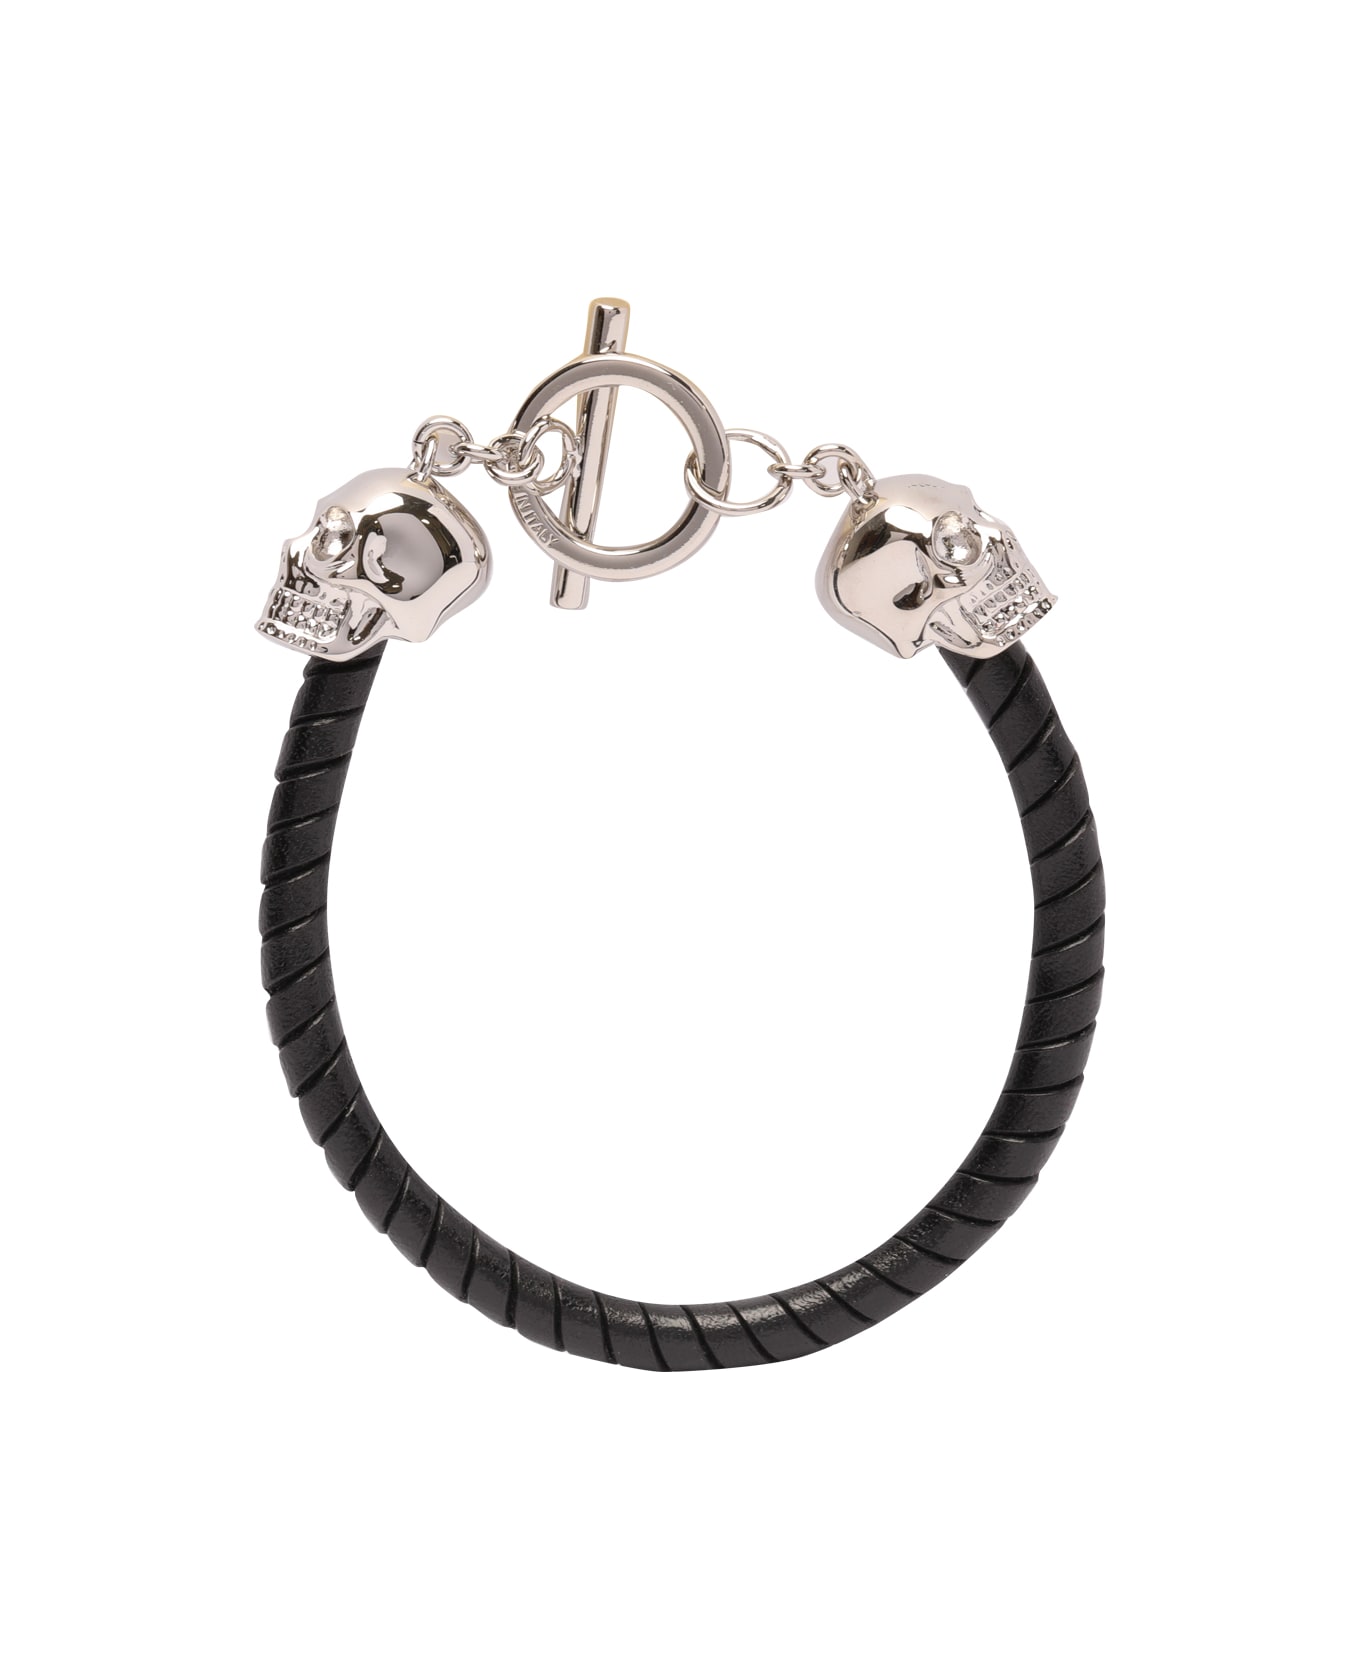 Alexander McQueen Skull Bracelet - Black